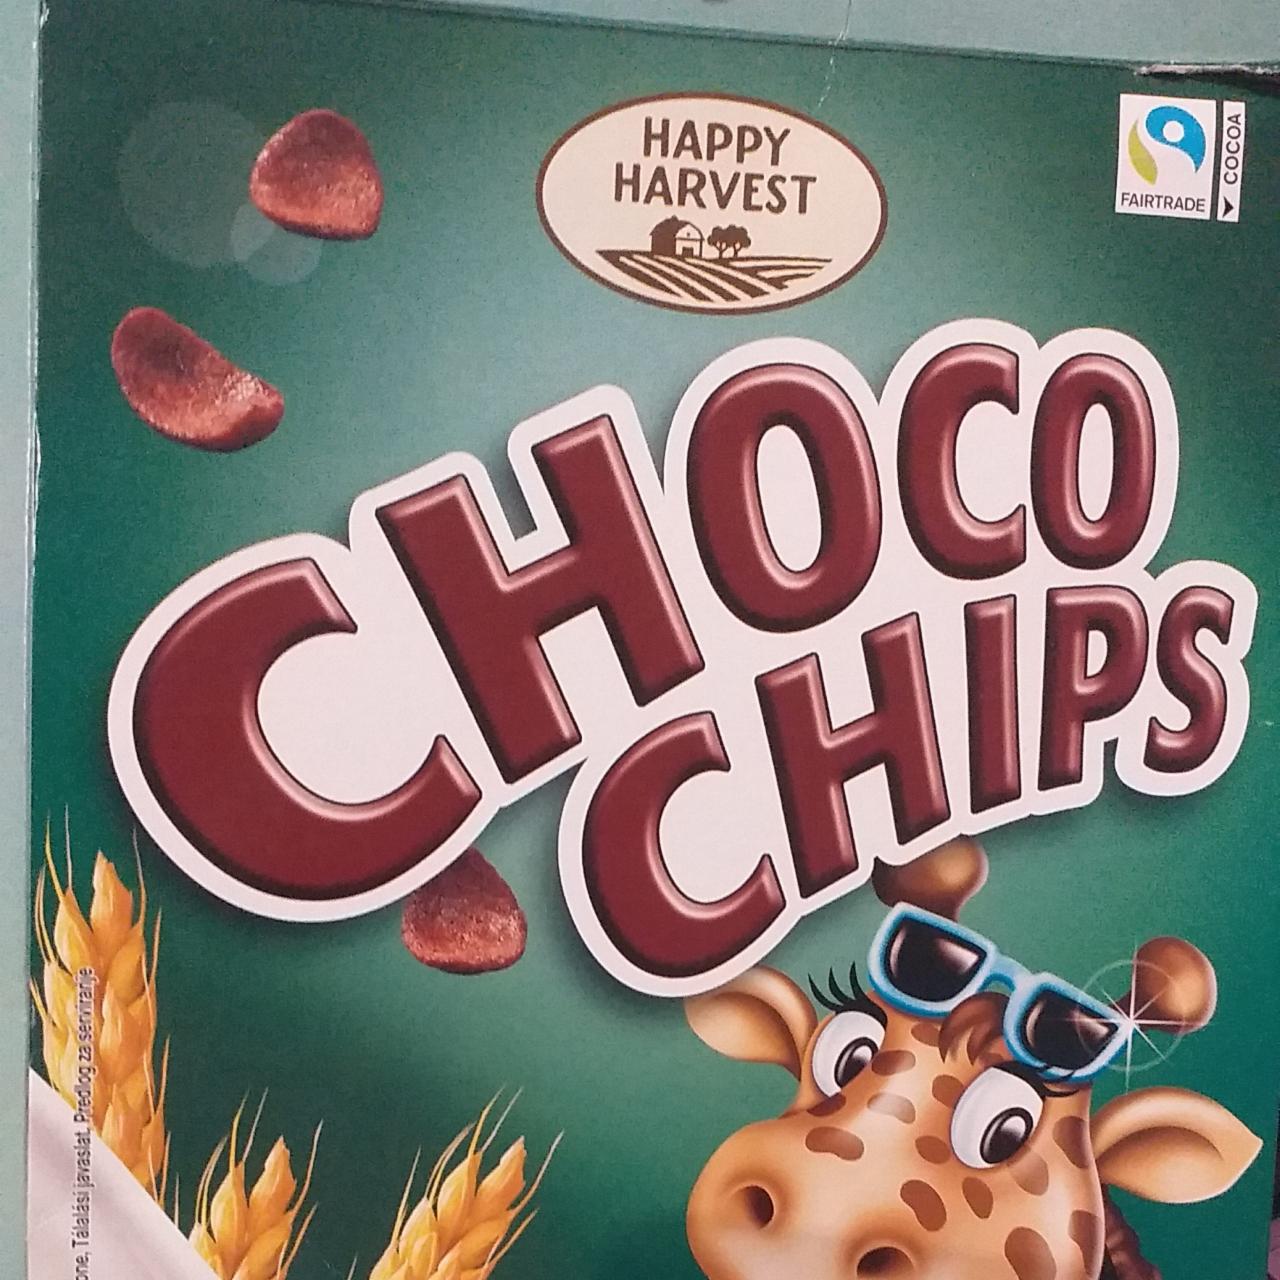 Képek - Choco chips Kakaós ízű ropogós búzapehely Happy Harvest